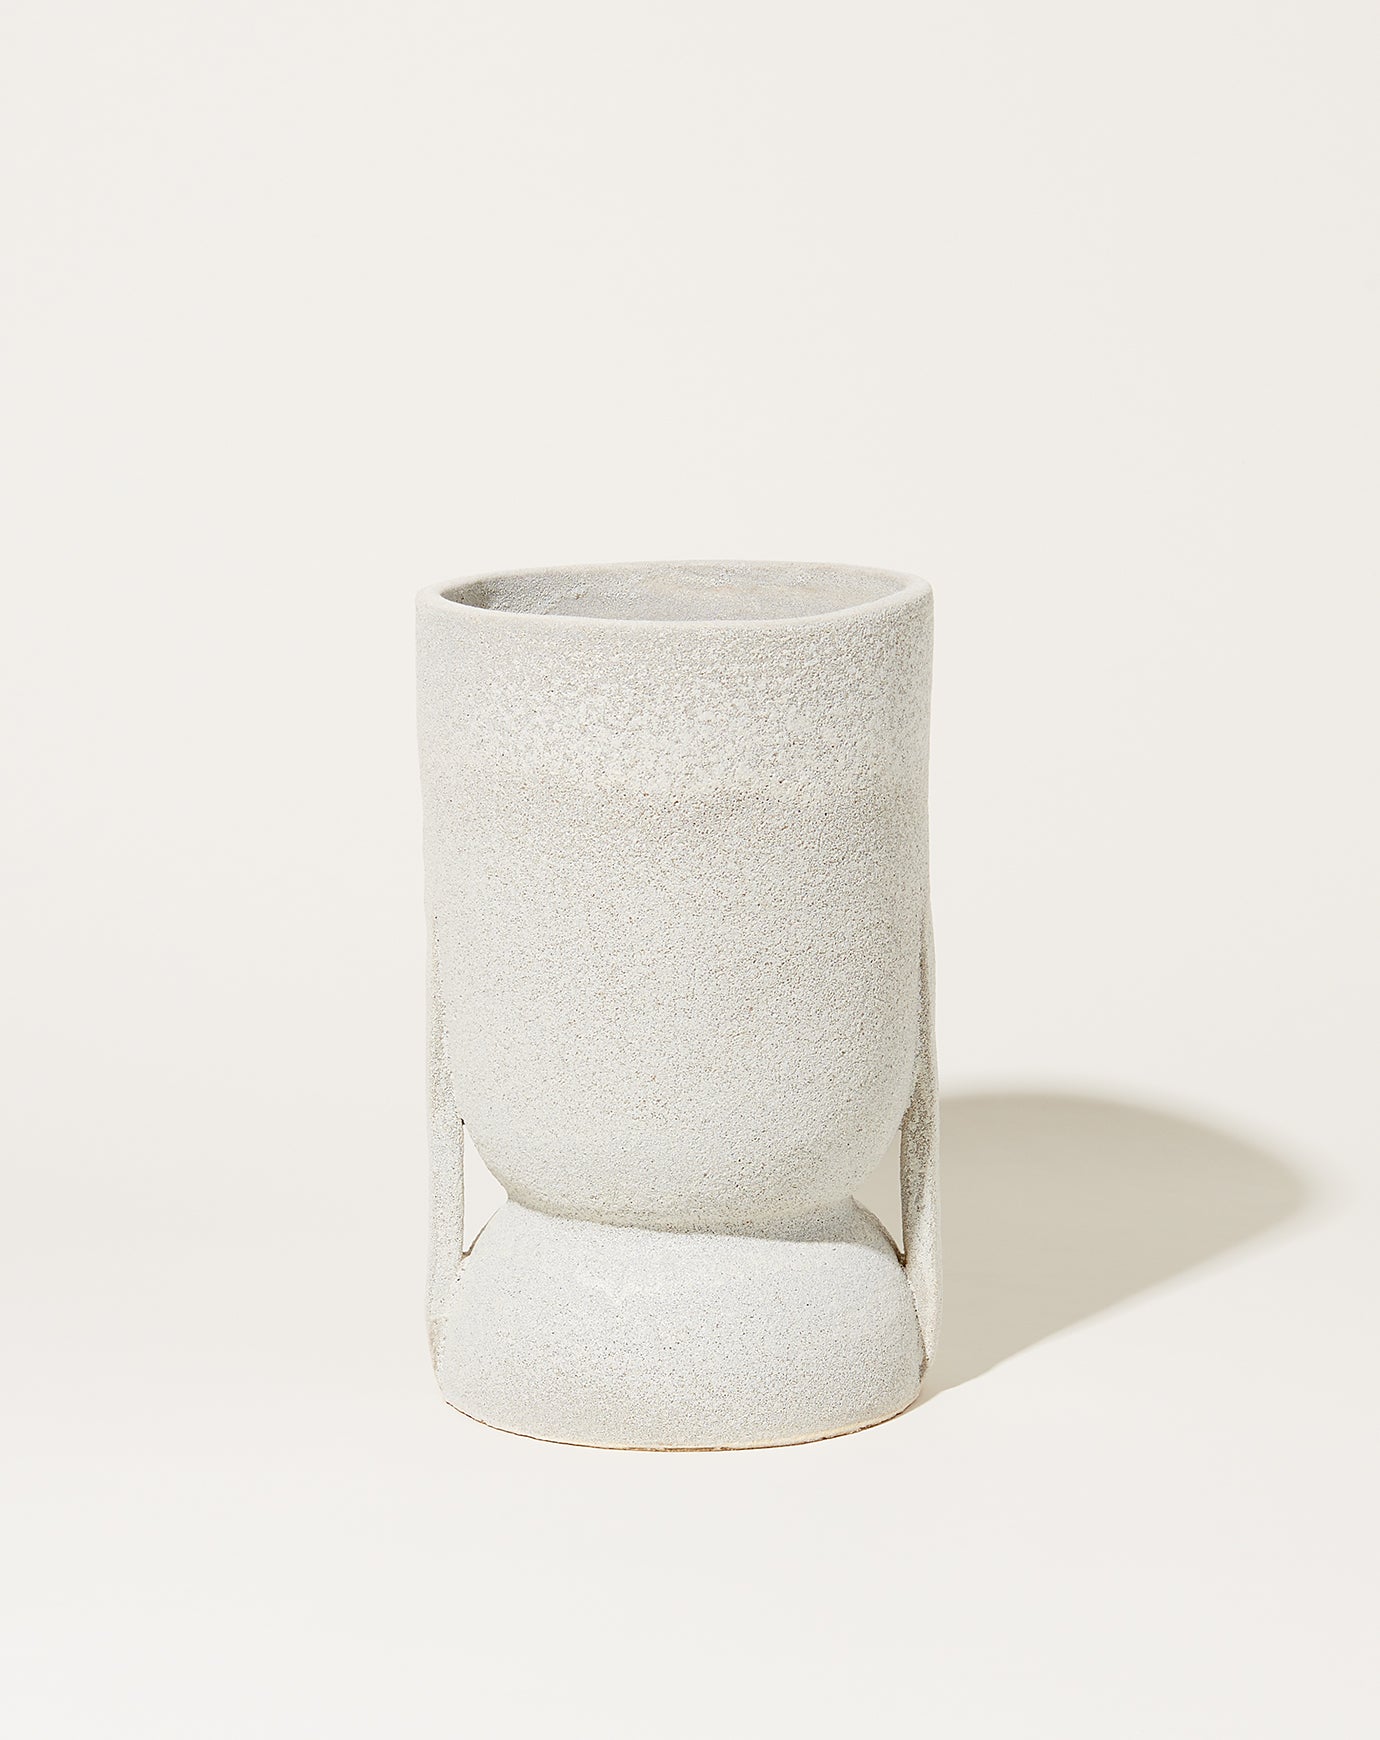 Nur Ceramics Habba Vessel in White